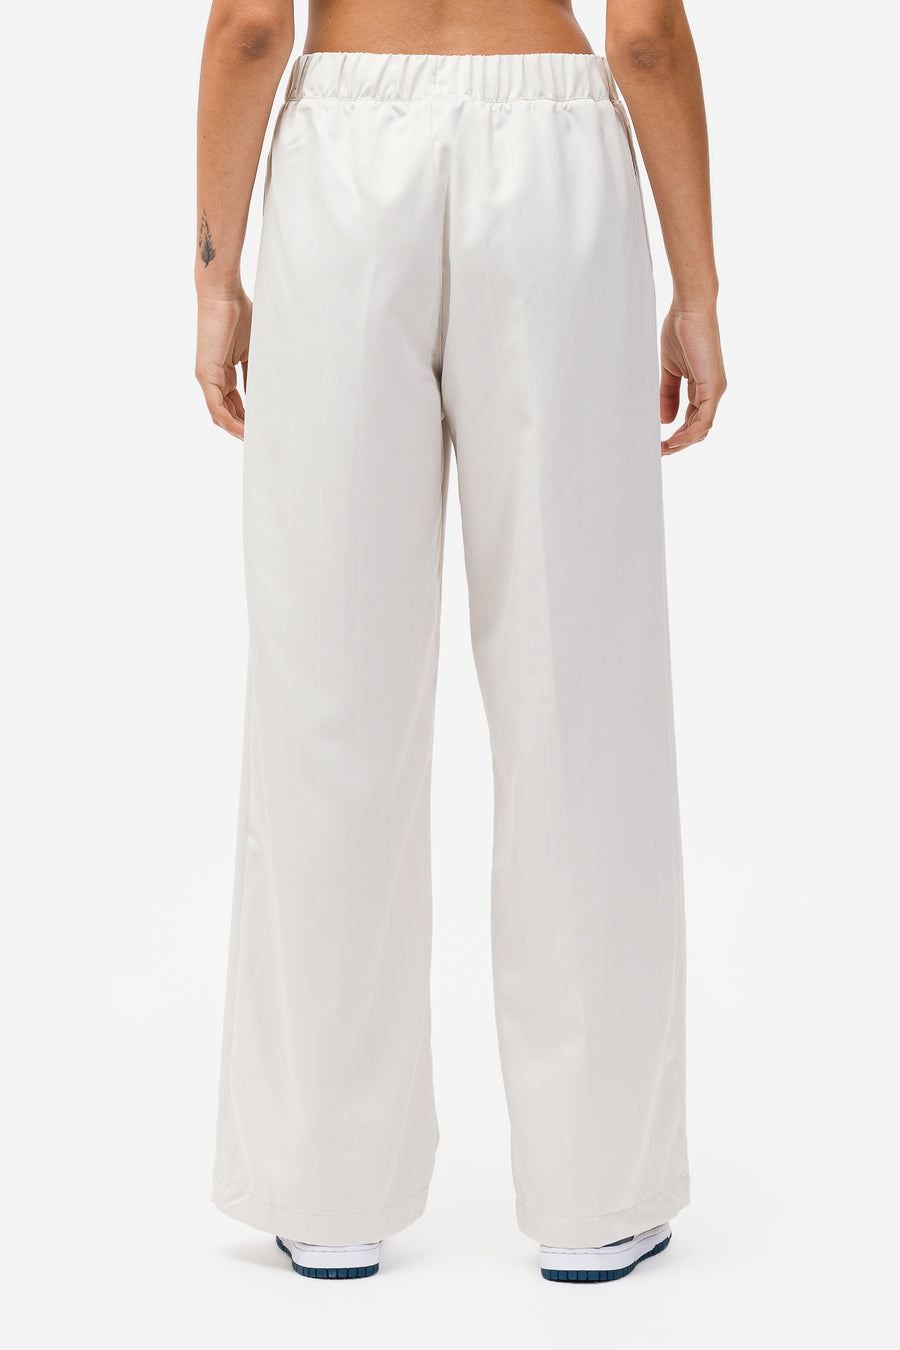 Jordan Heritage Woven Pants in Off-White